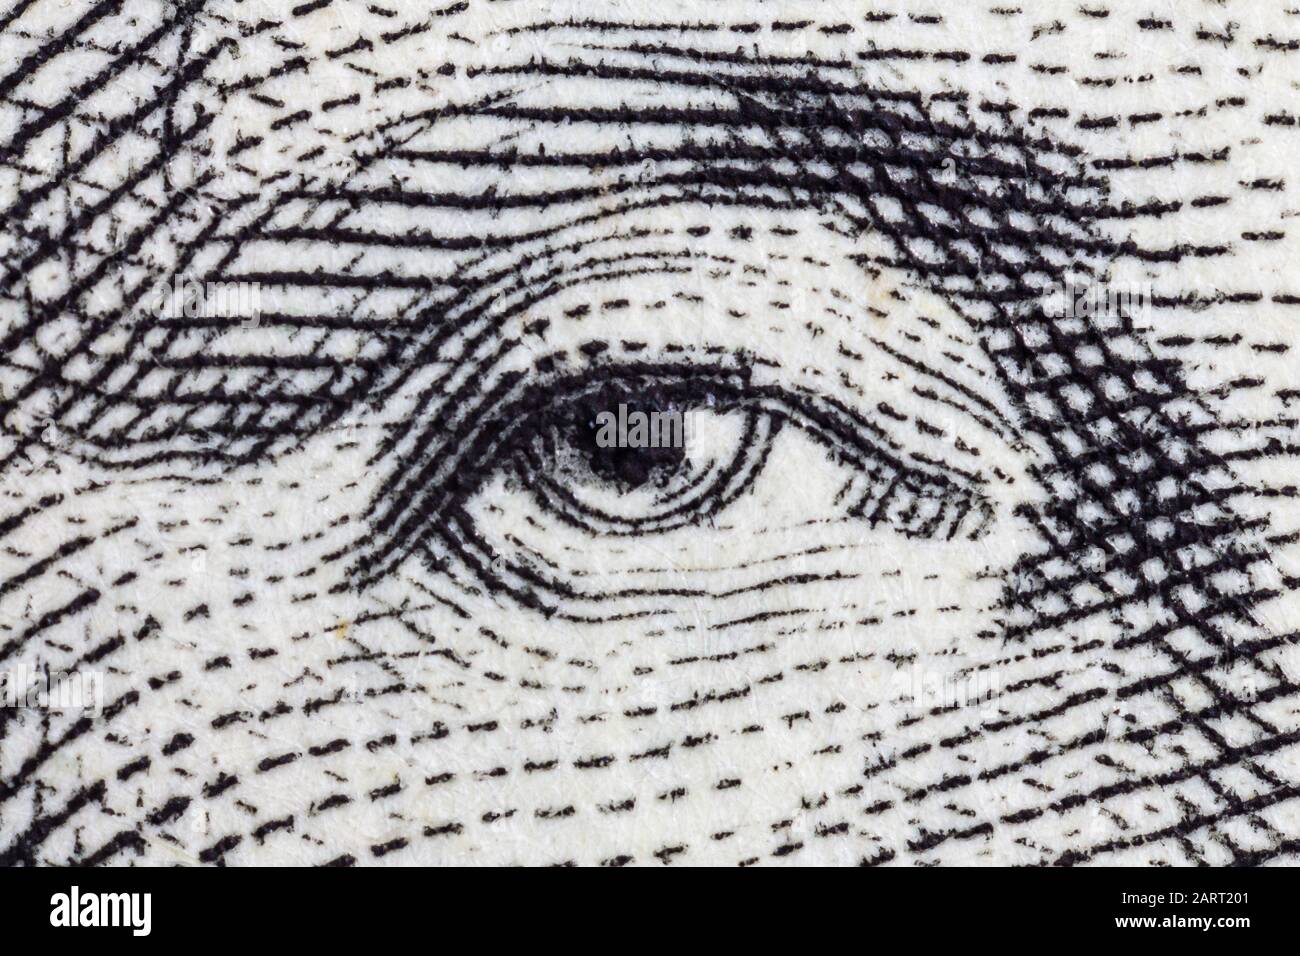 Macro close up photograph of George Washington eye on the US one dollar bill. Stock Photo